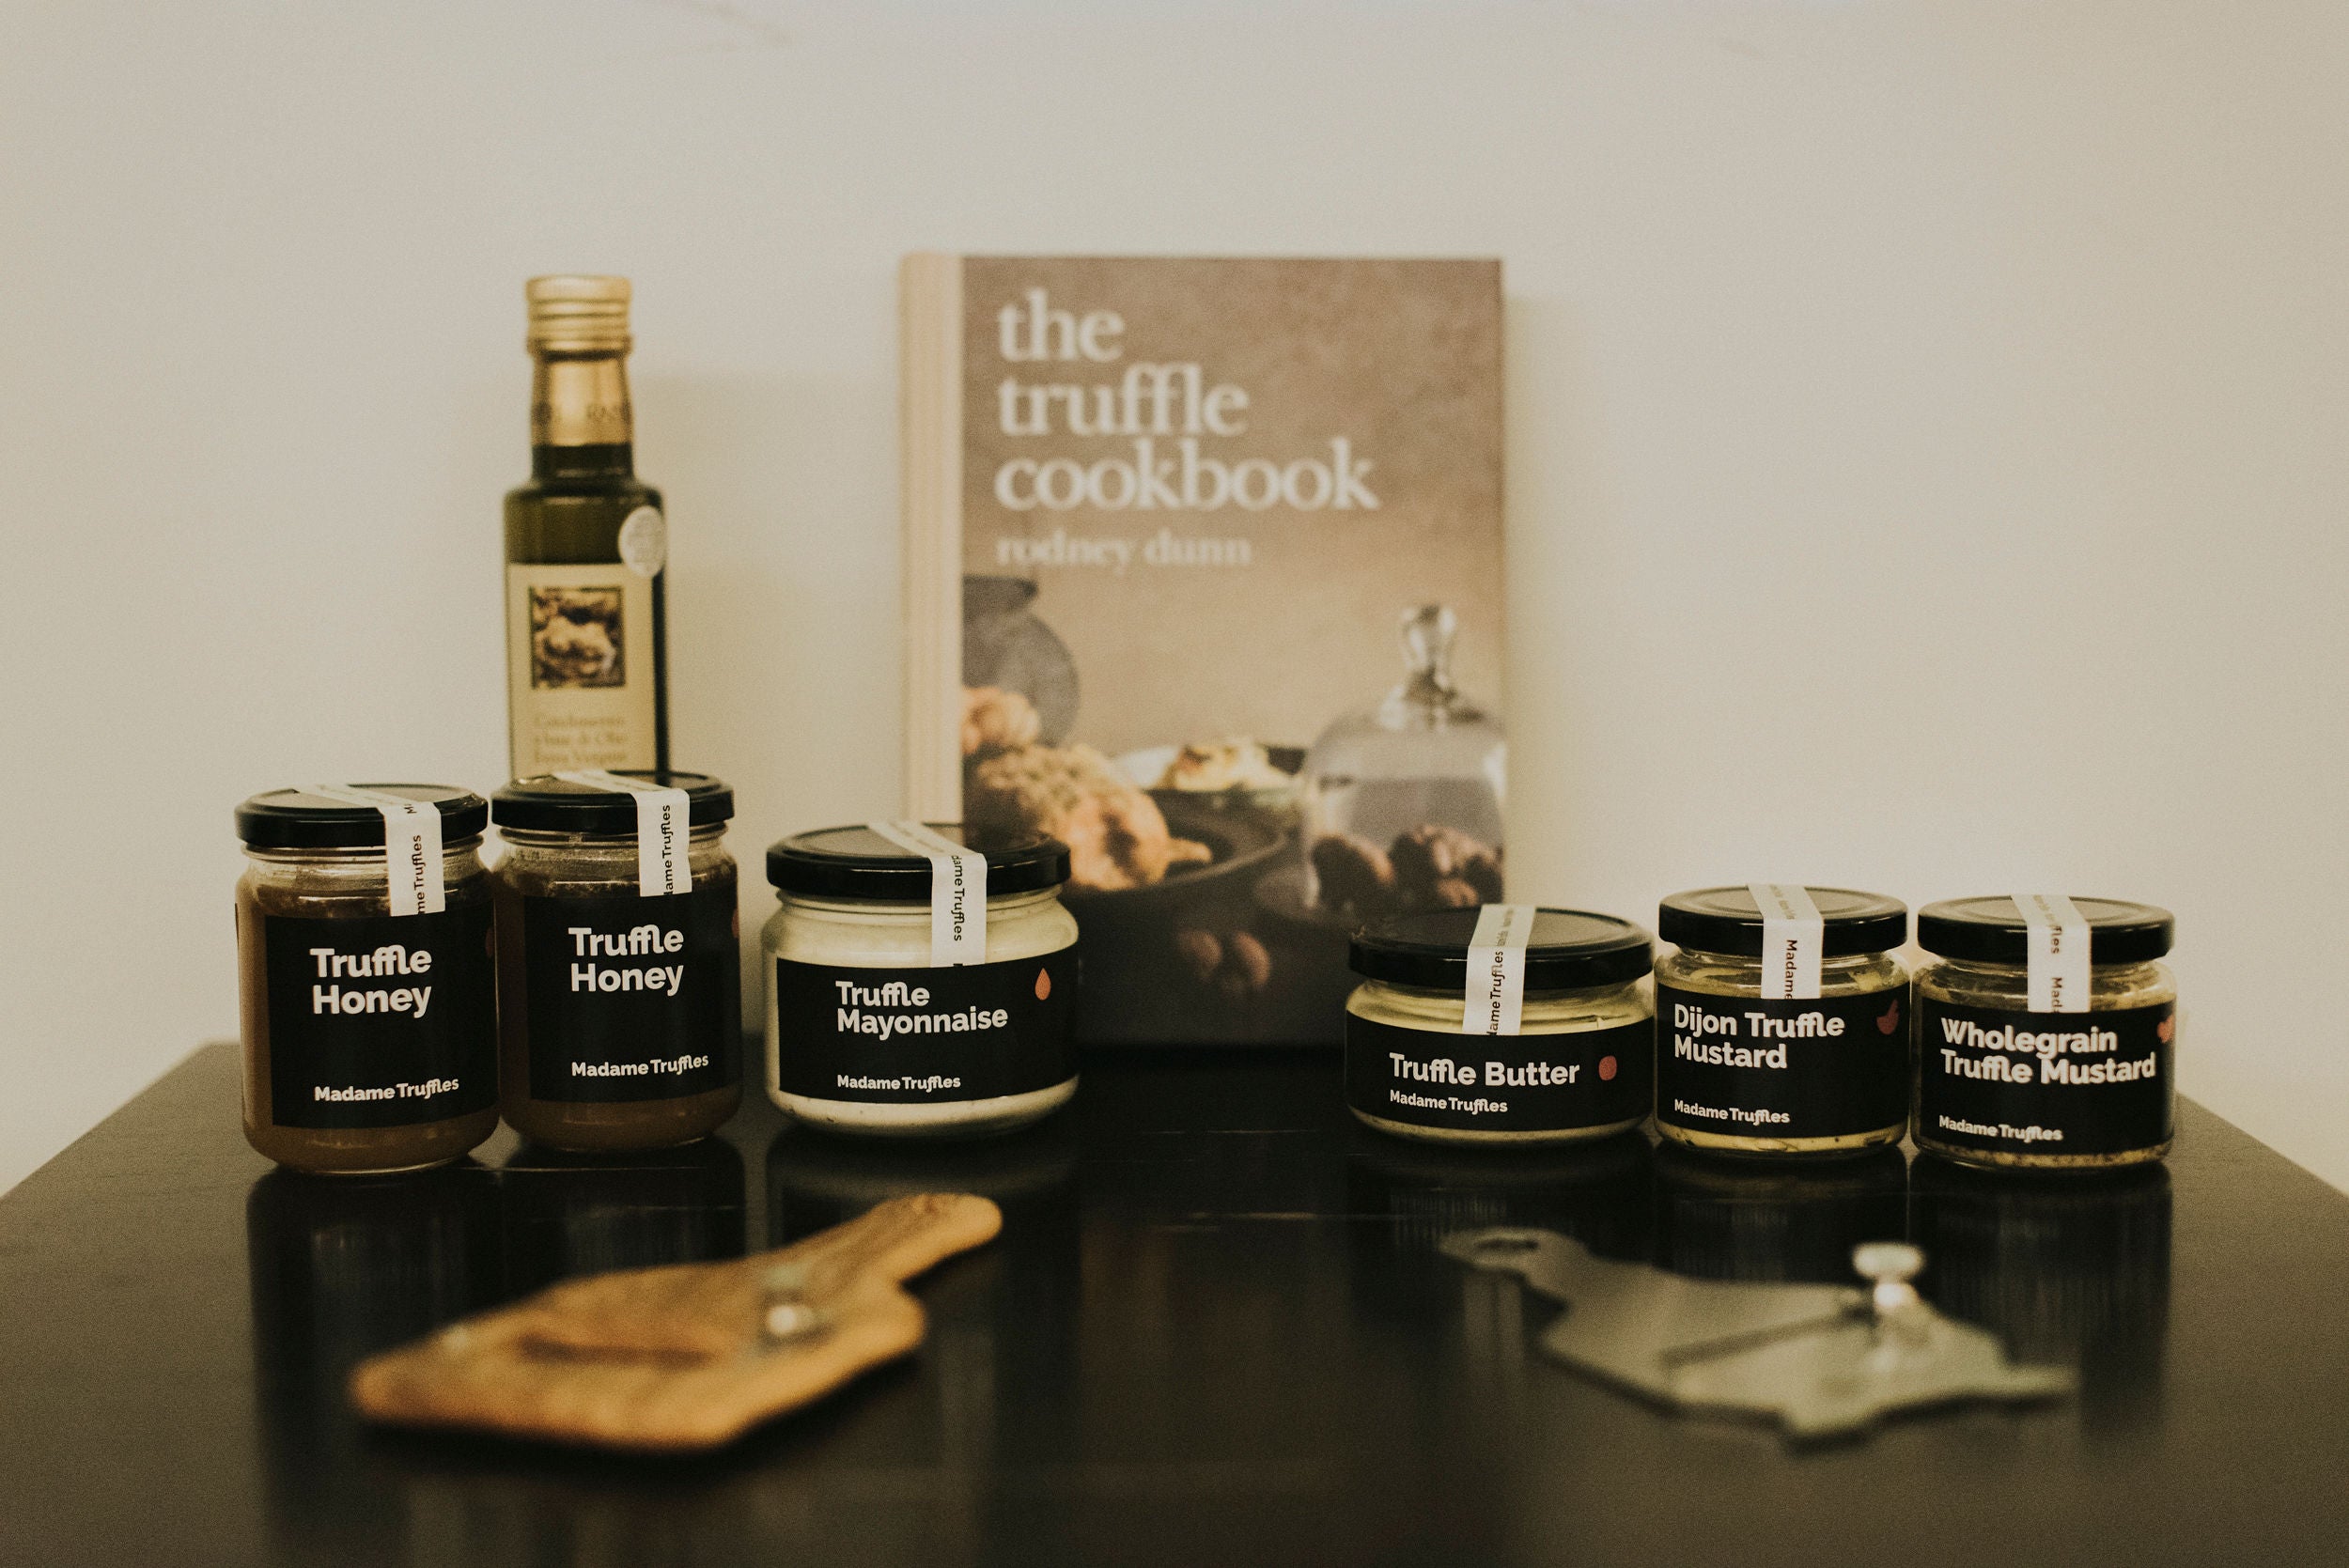 the Truffle cookbook